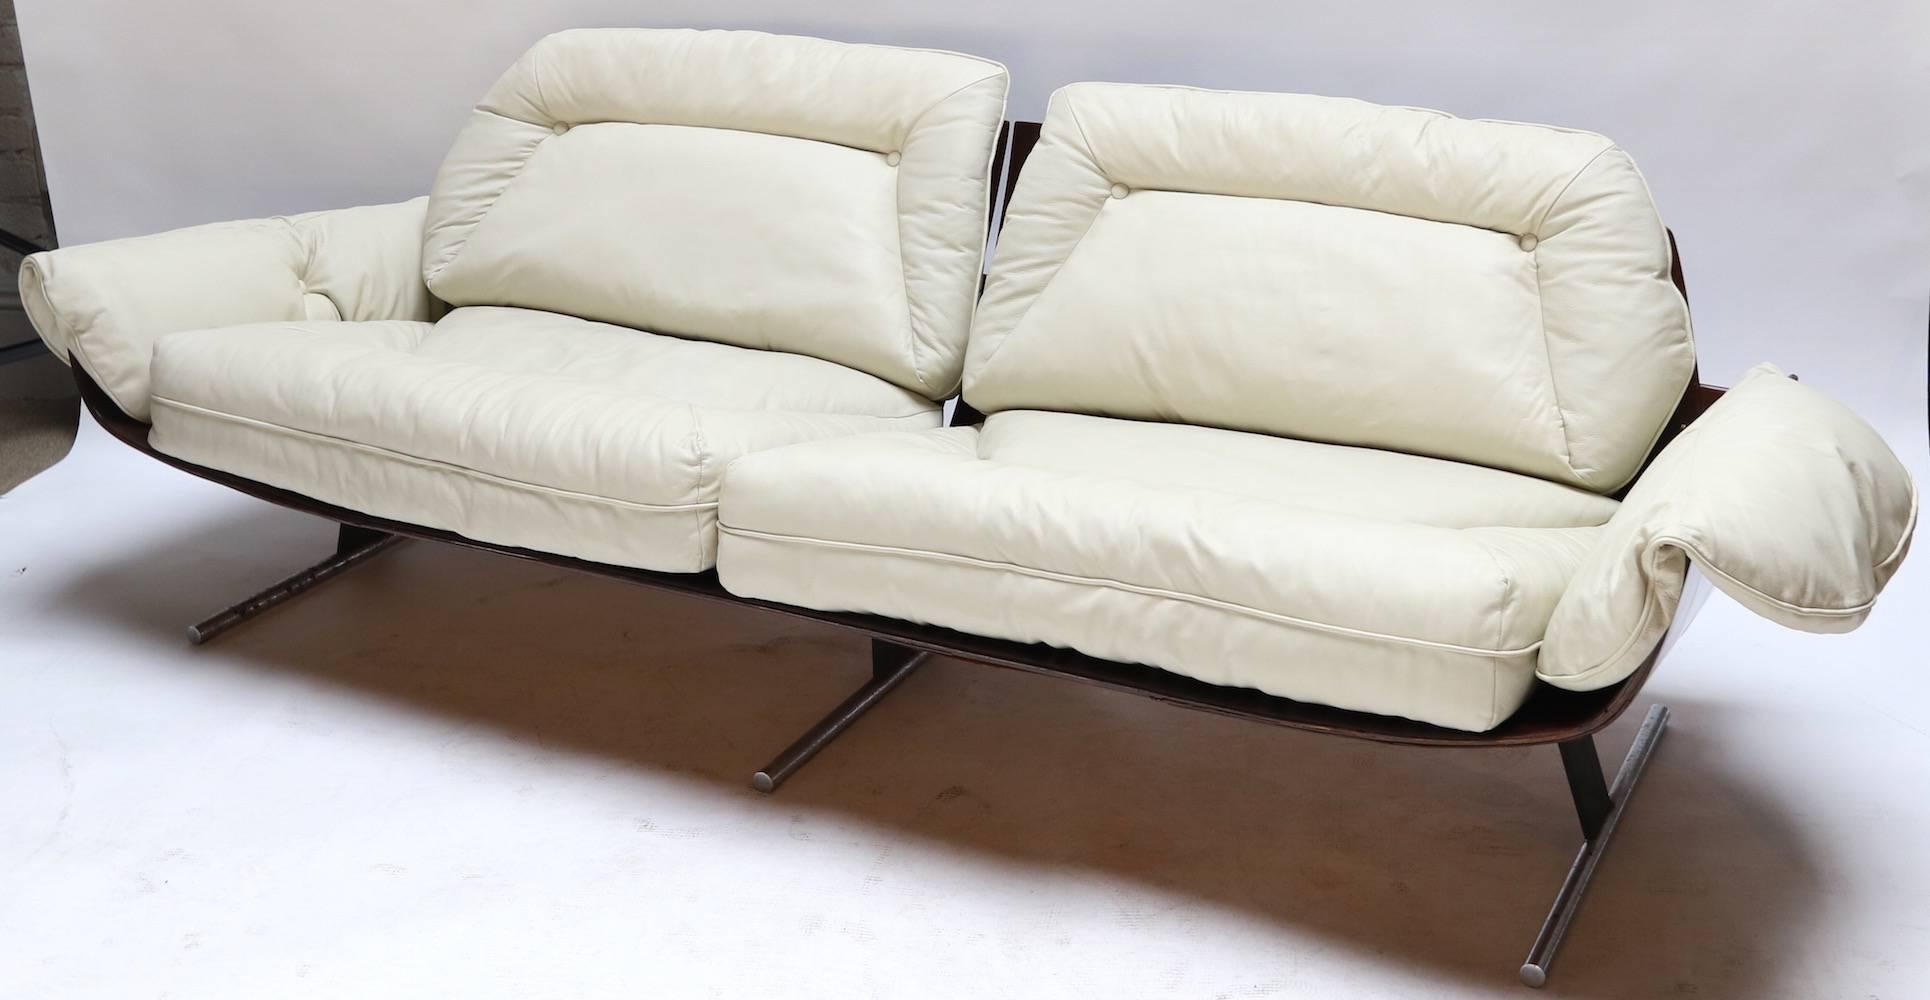 Rare 1960s Presidencial sofa by Jorge Zalszupin, in Brazilian jacaranda with leather cushions.